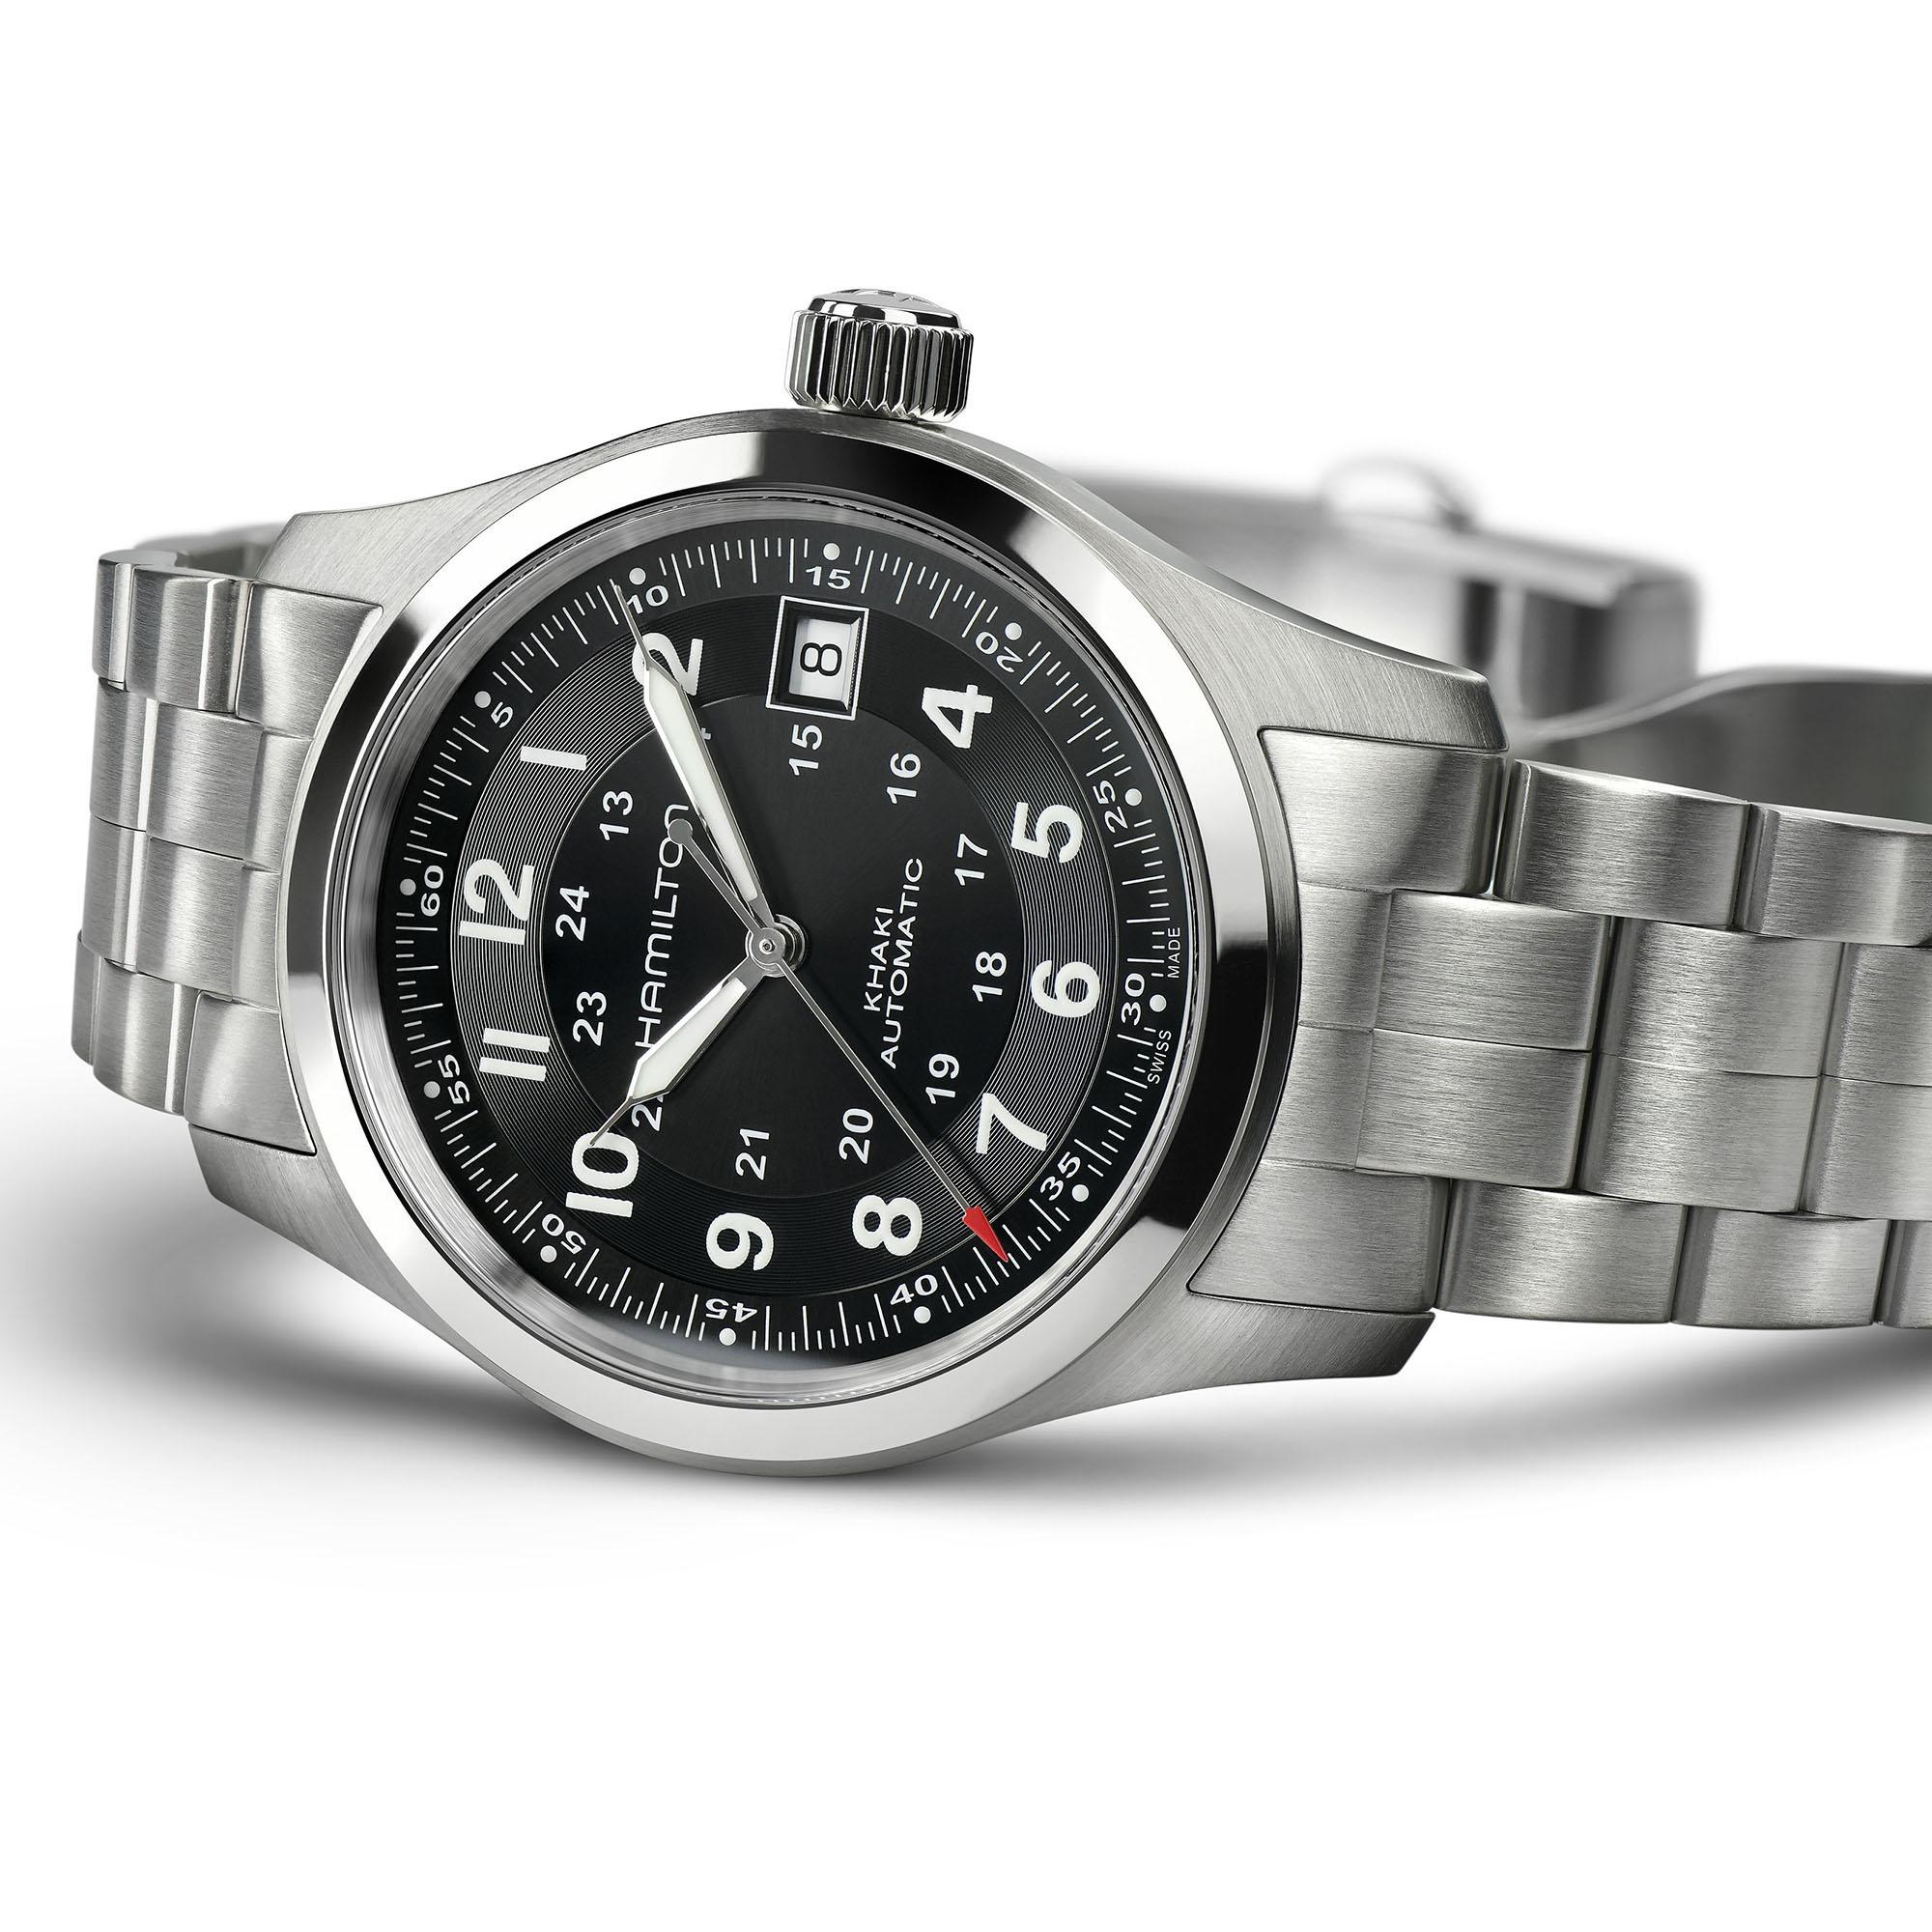 Hamilton Khaki Field Automatic 40mm Bracelet Watch